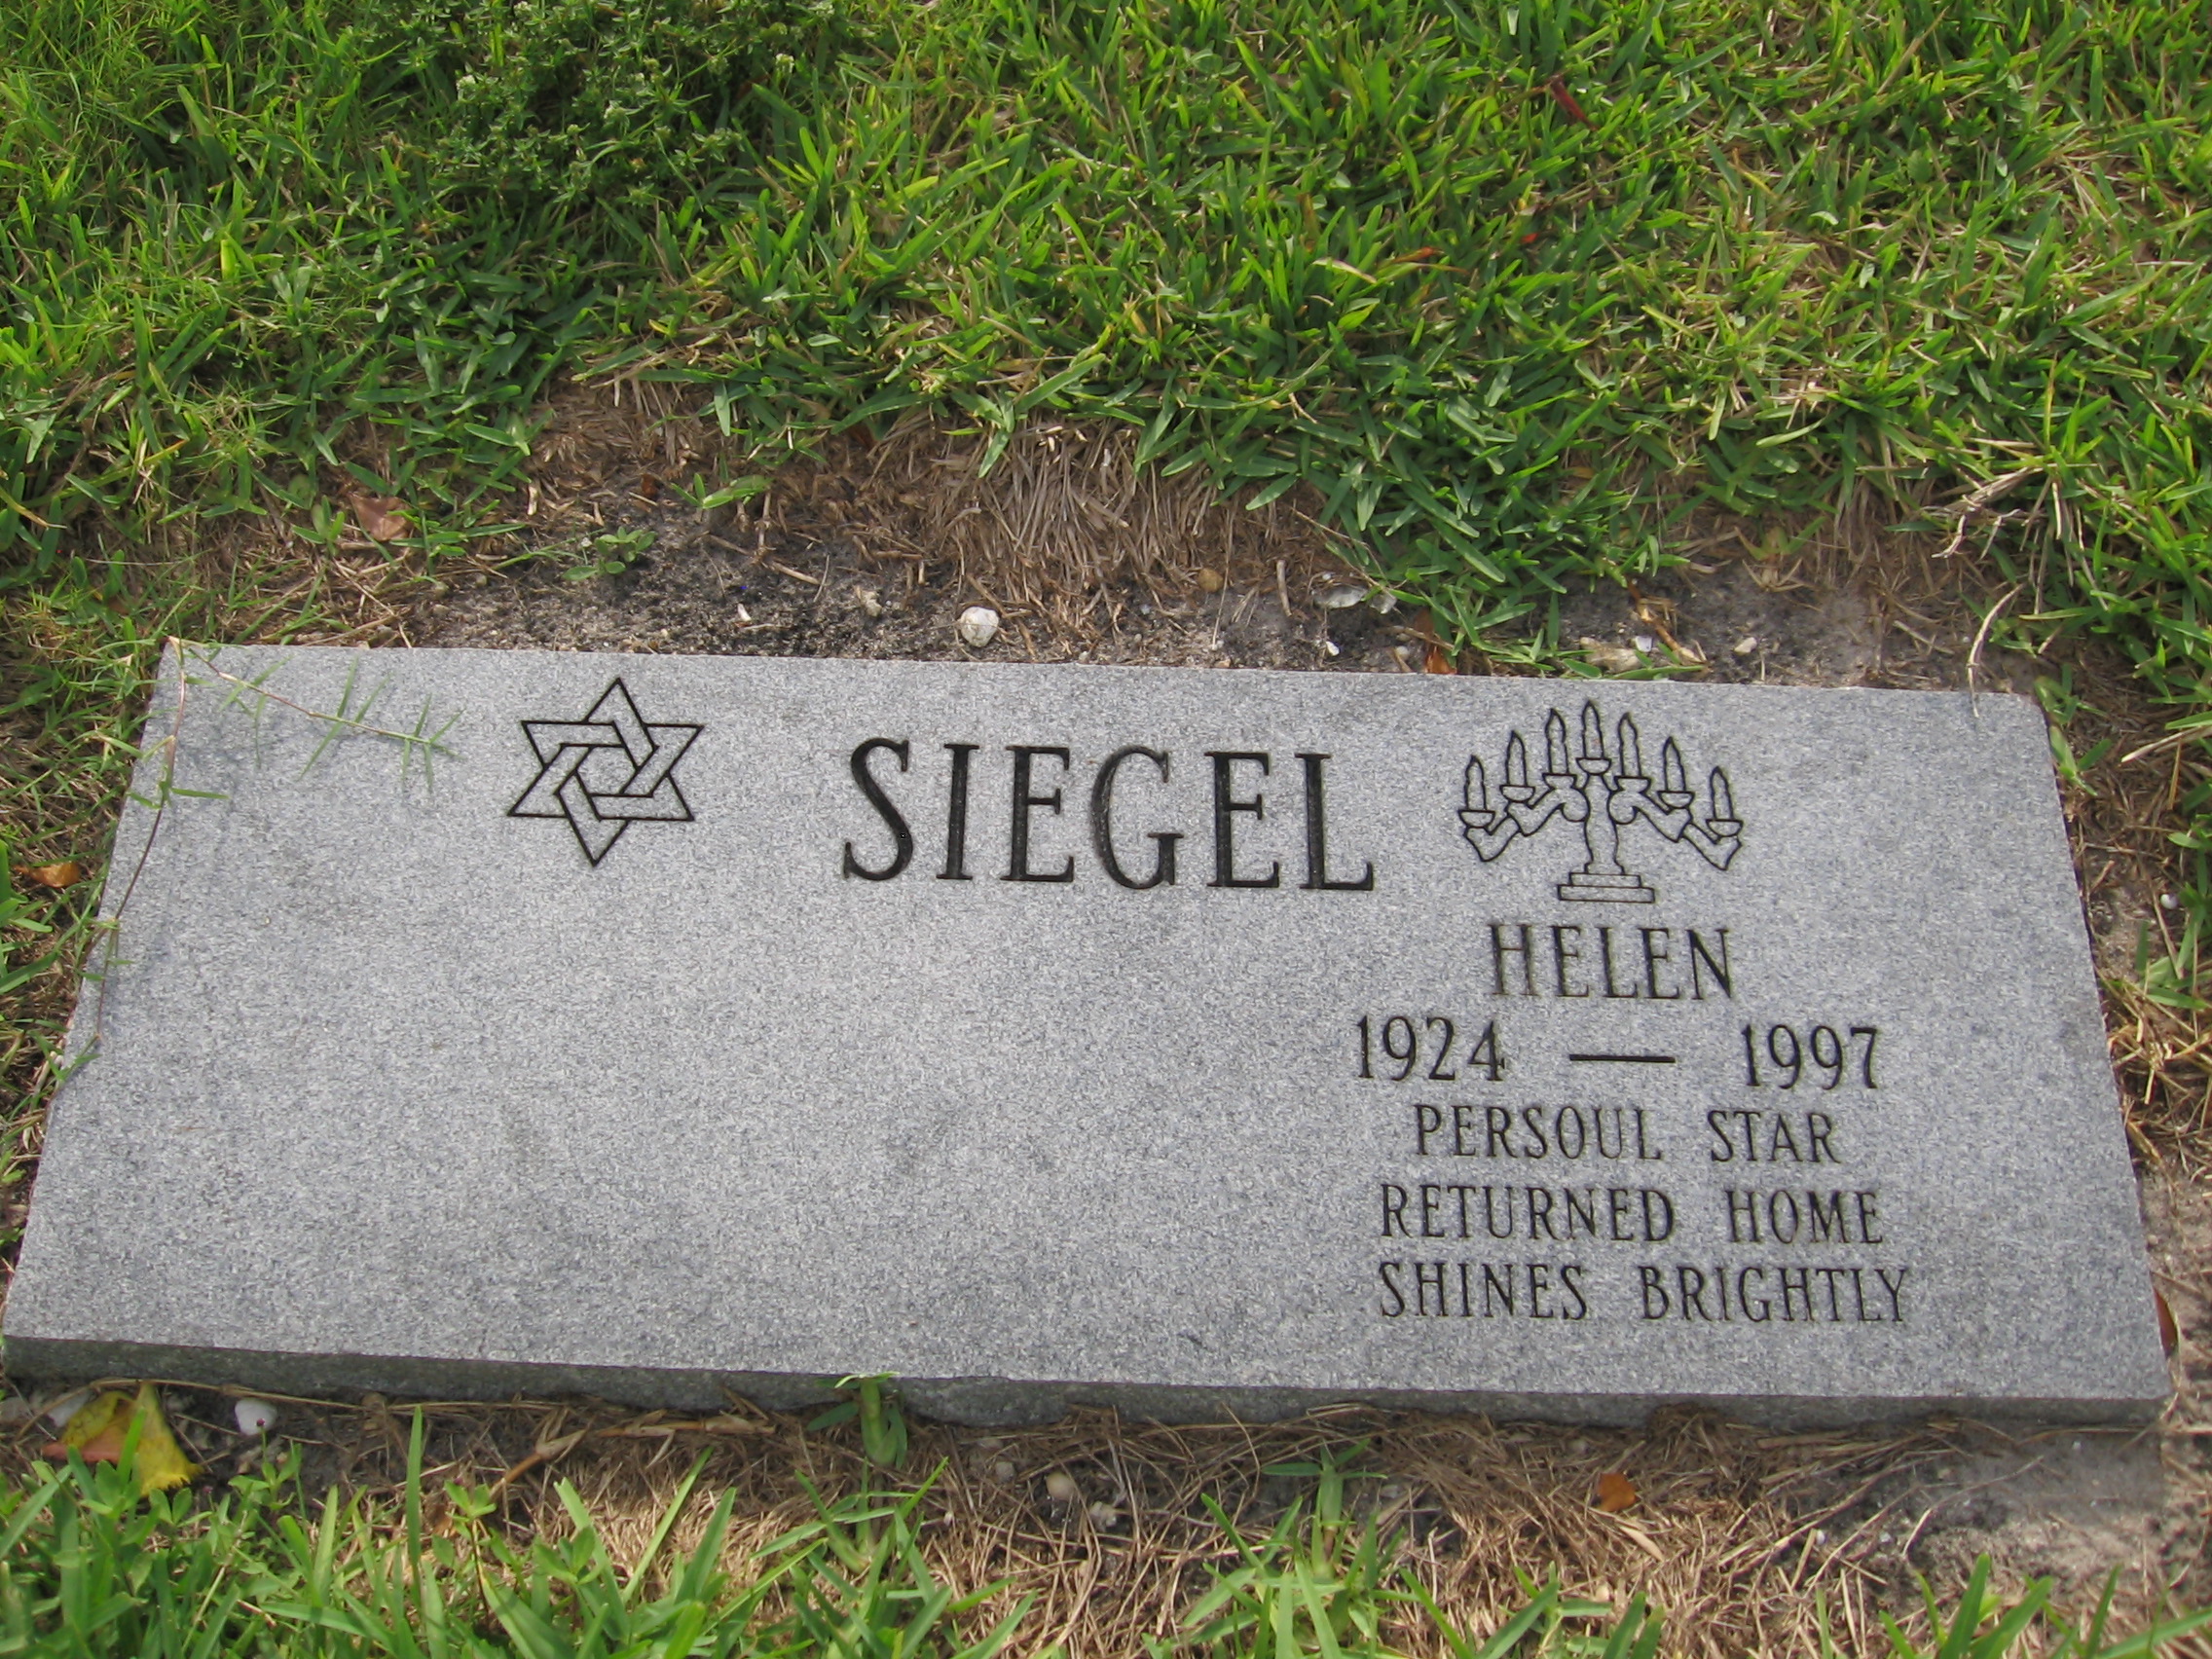 Helen Siegel